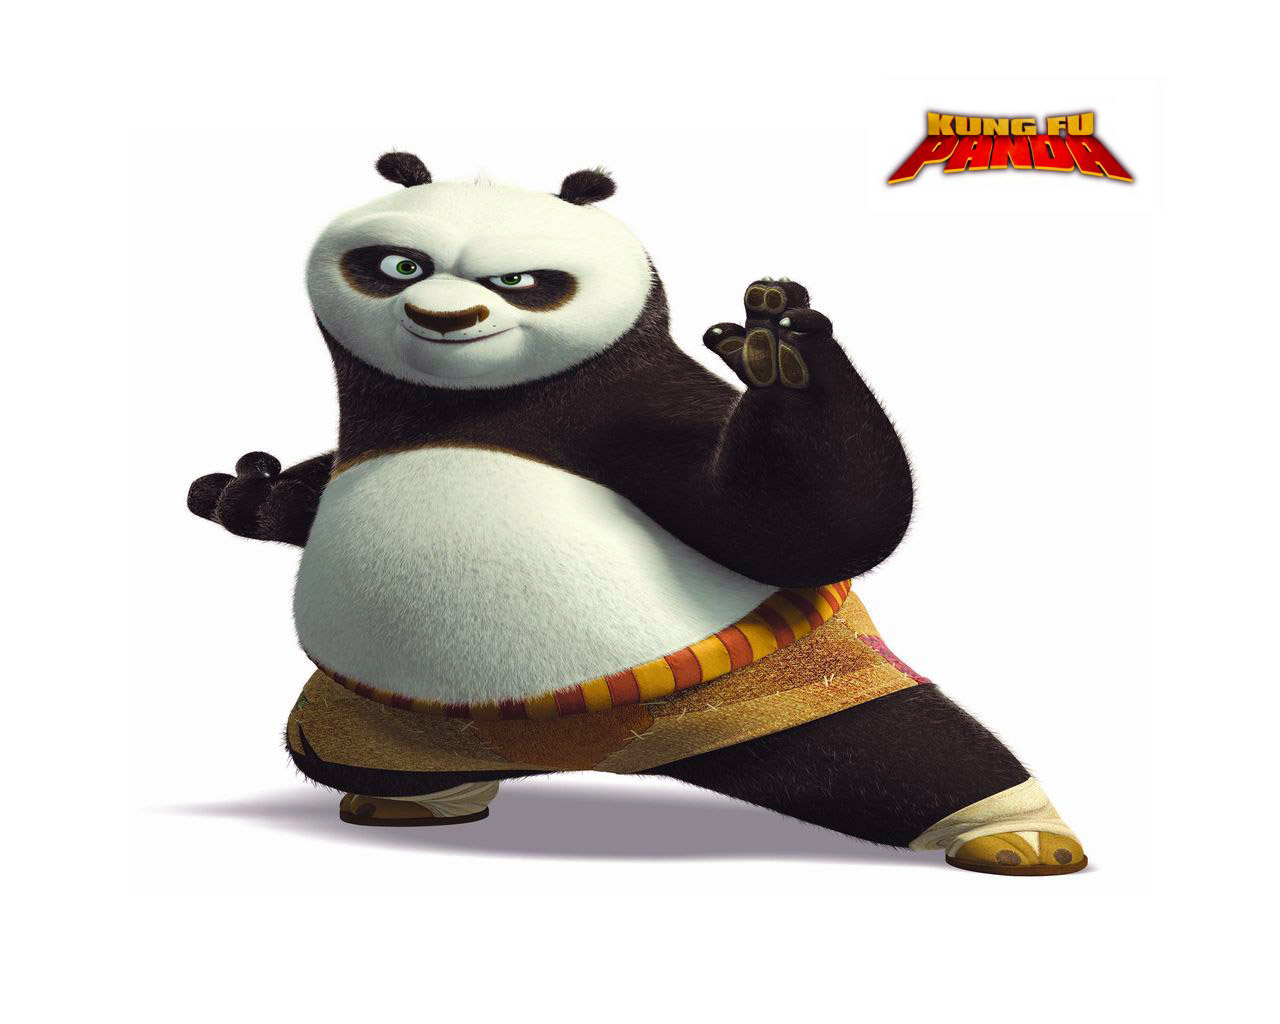 KungFu Panda 3D Animation Wallpapers - HD Wallpapers 80286